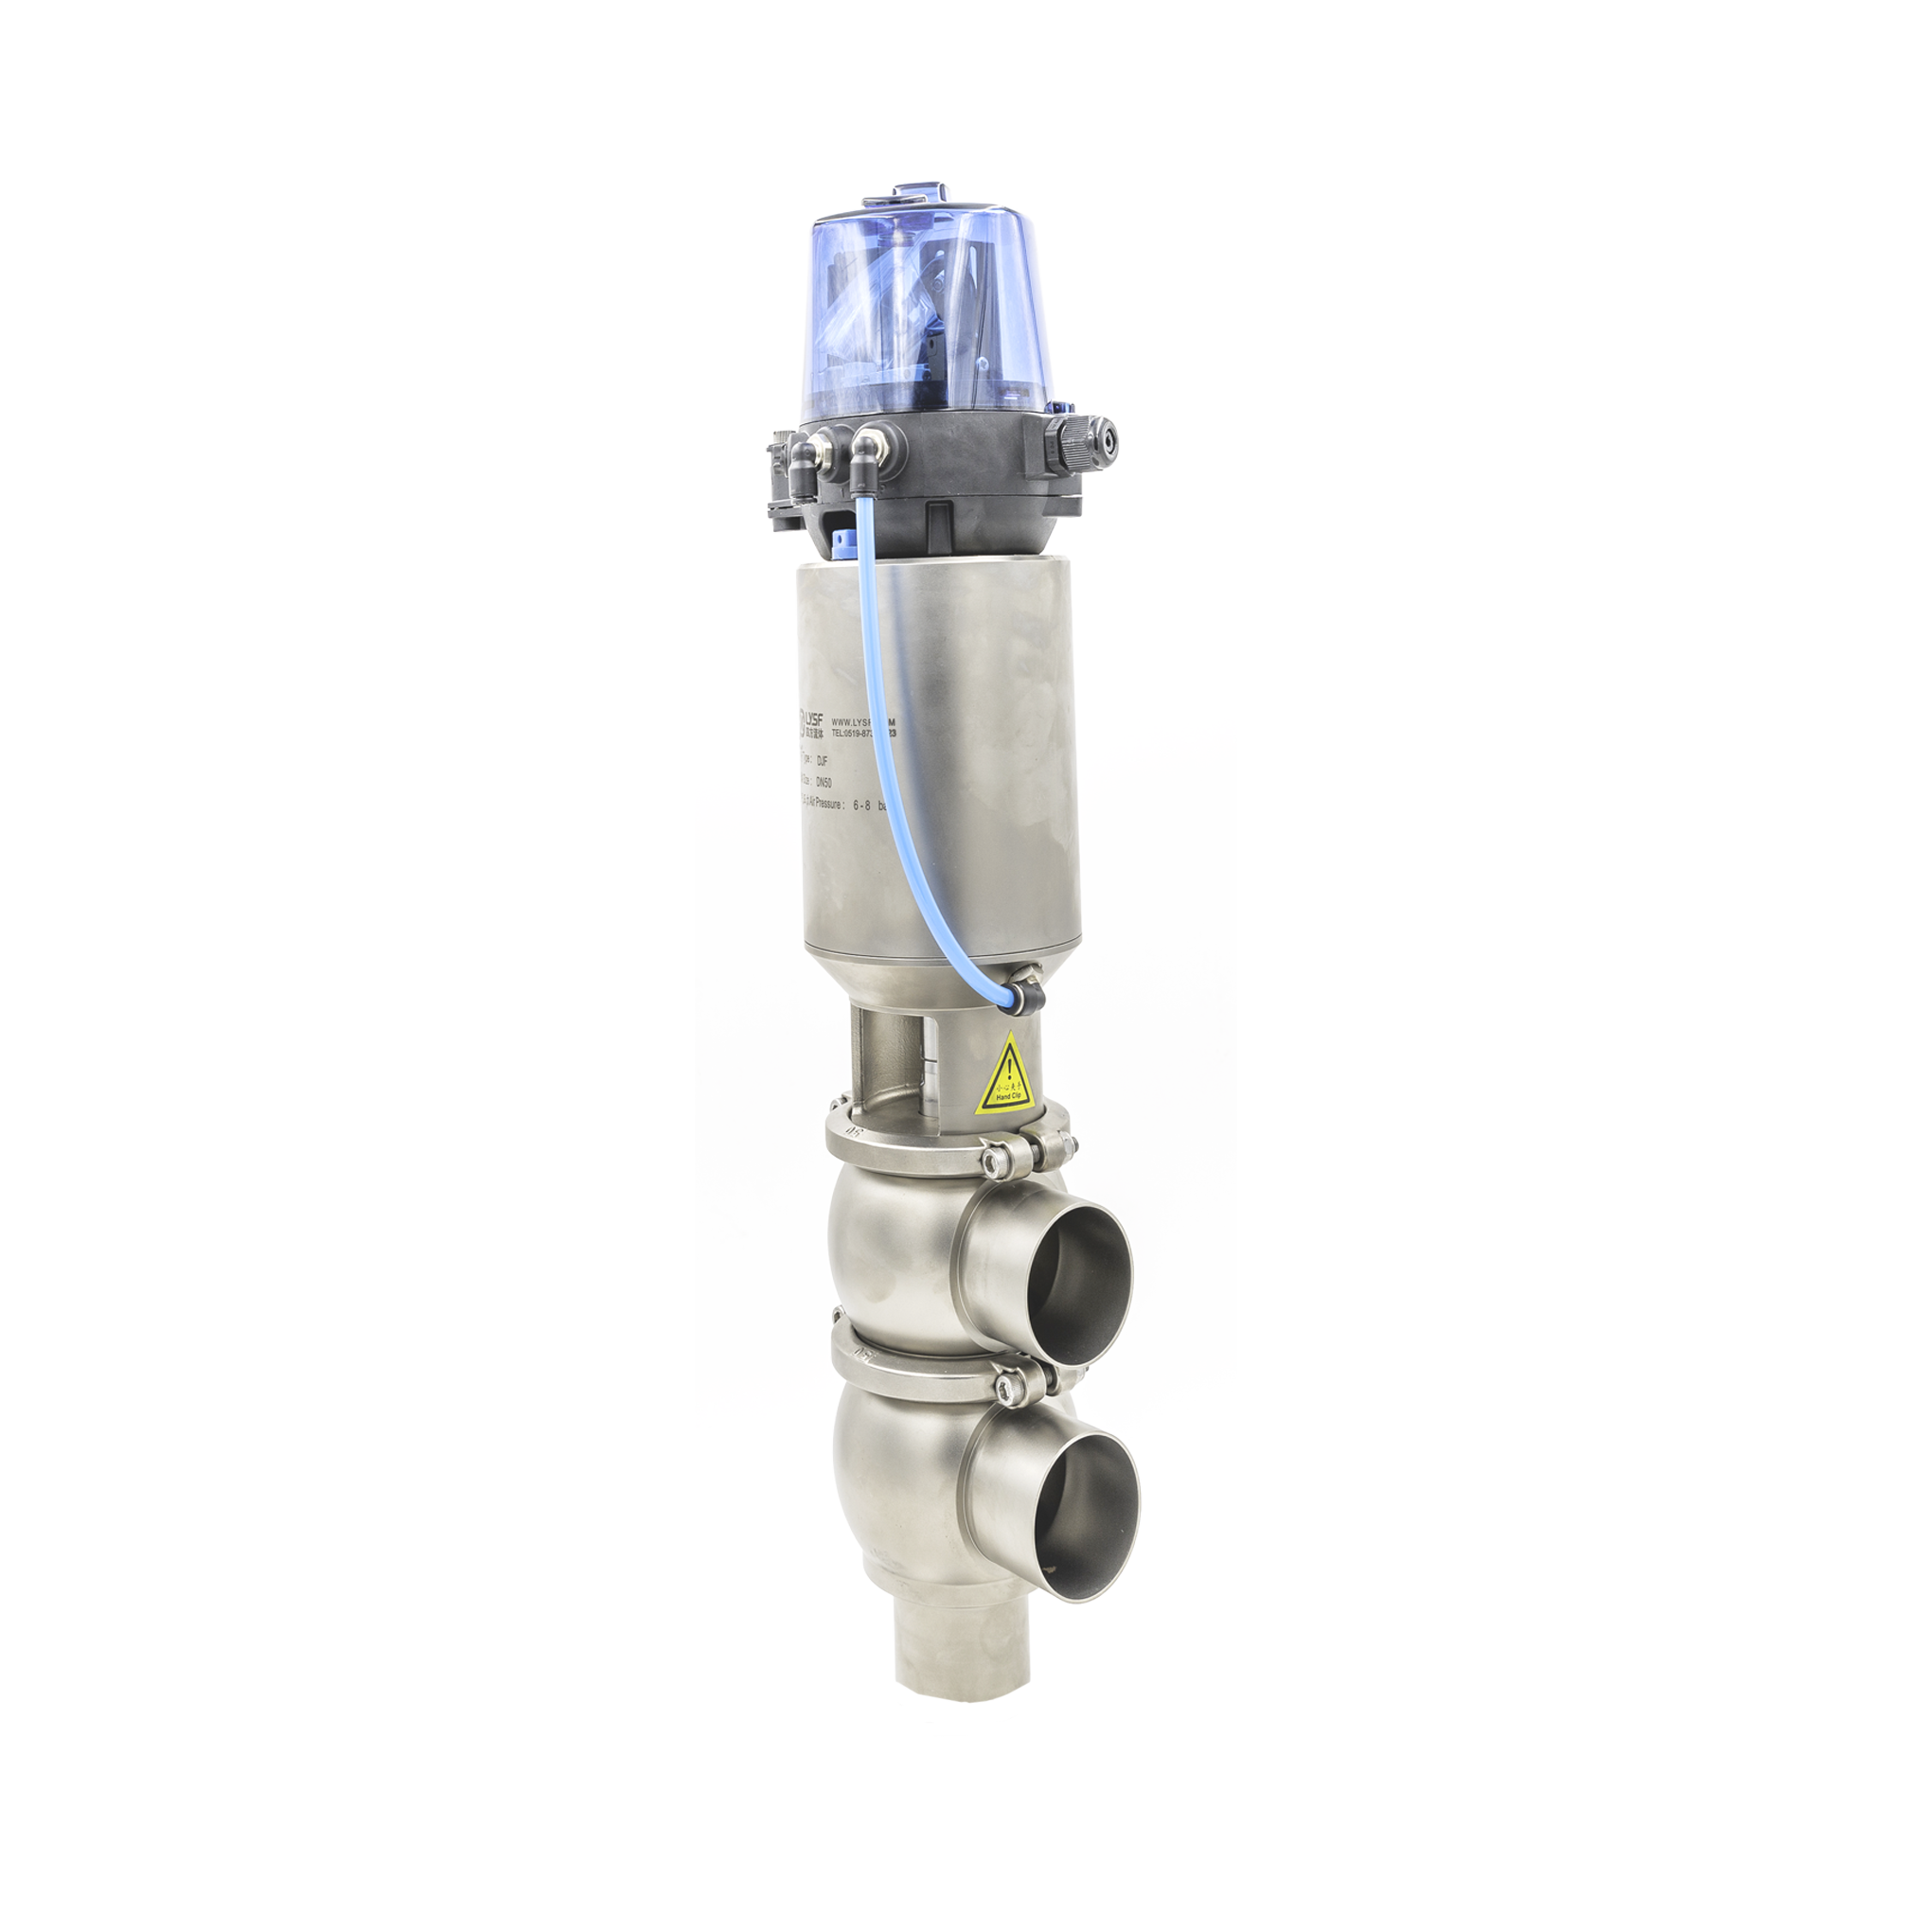 LL type pneumatic reversing valve